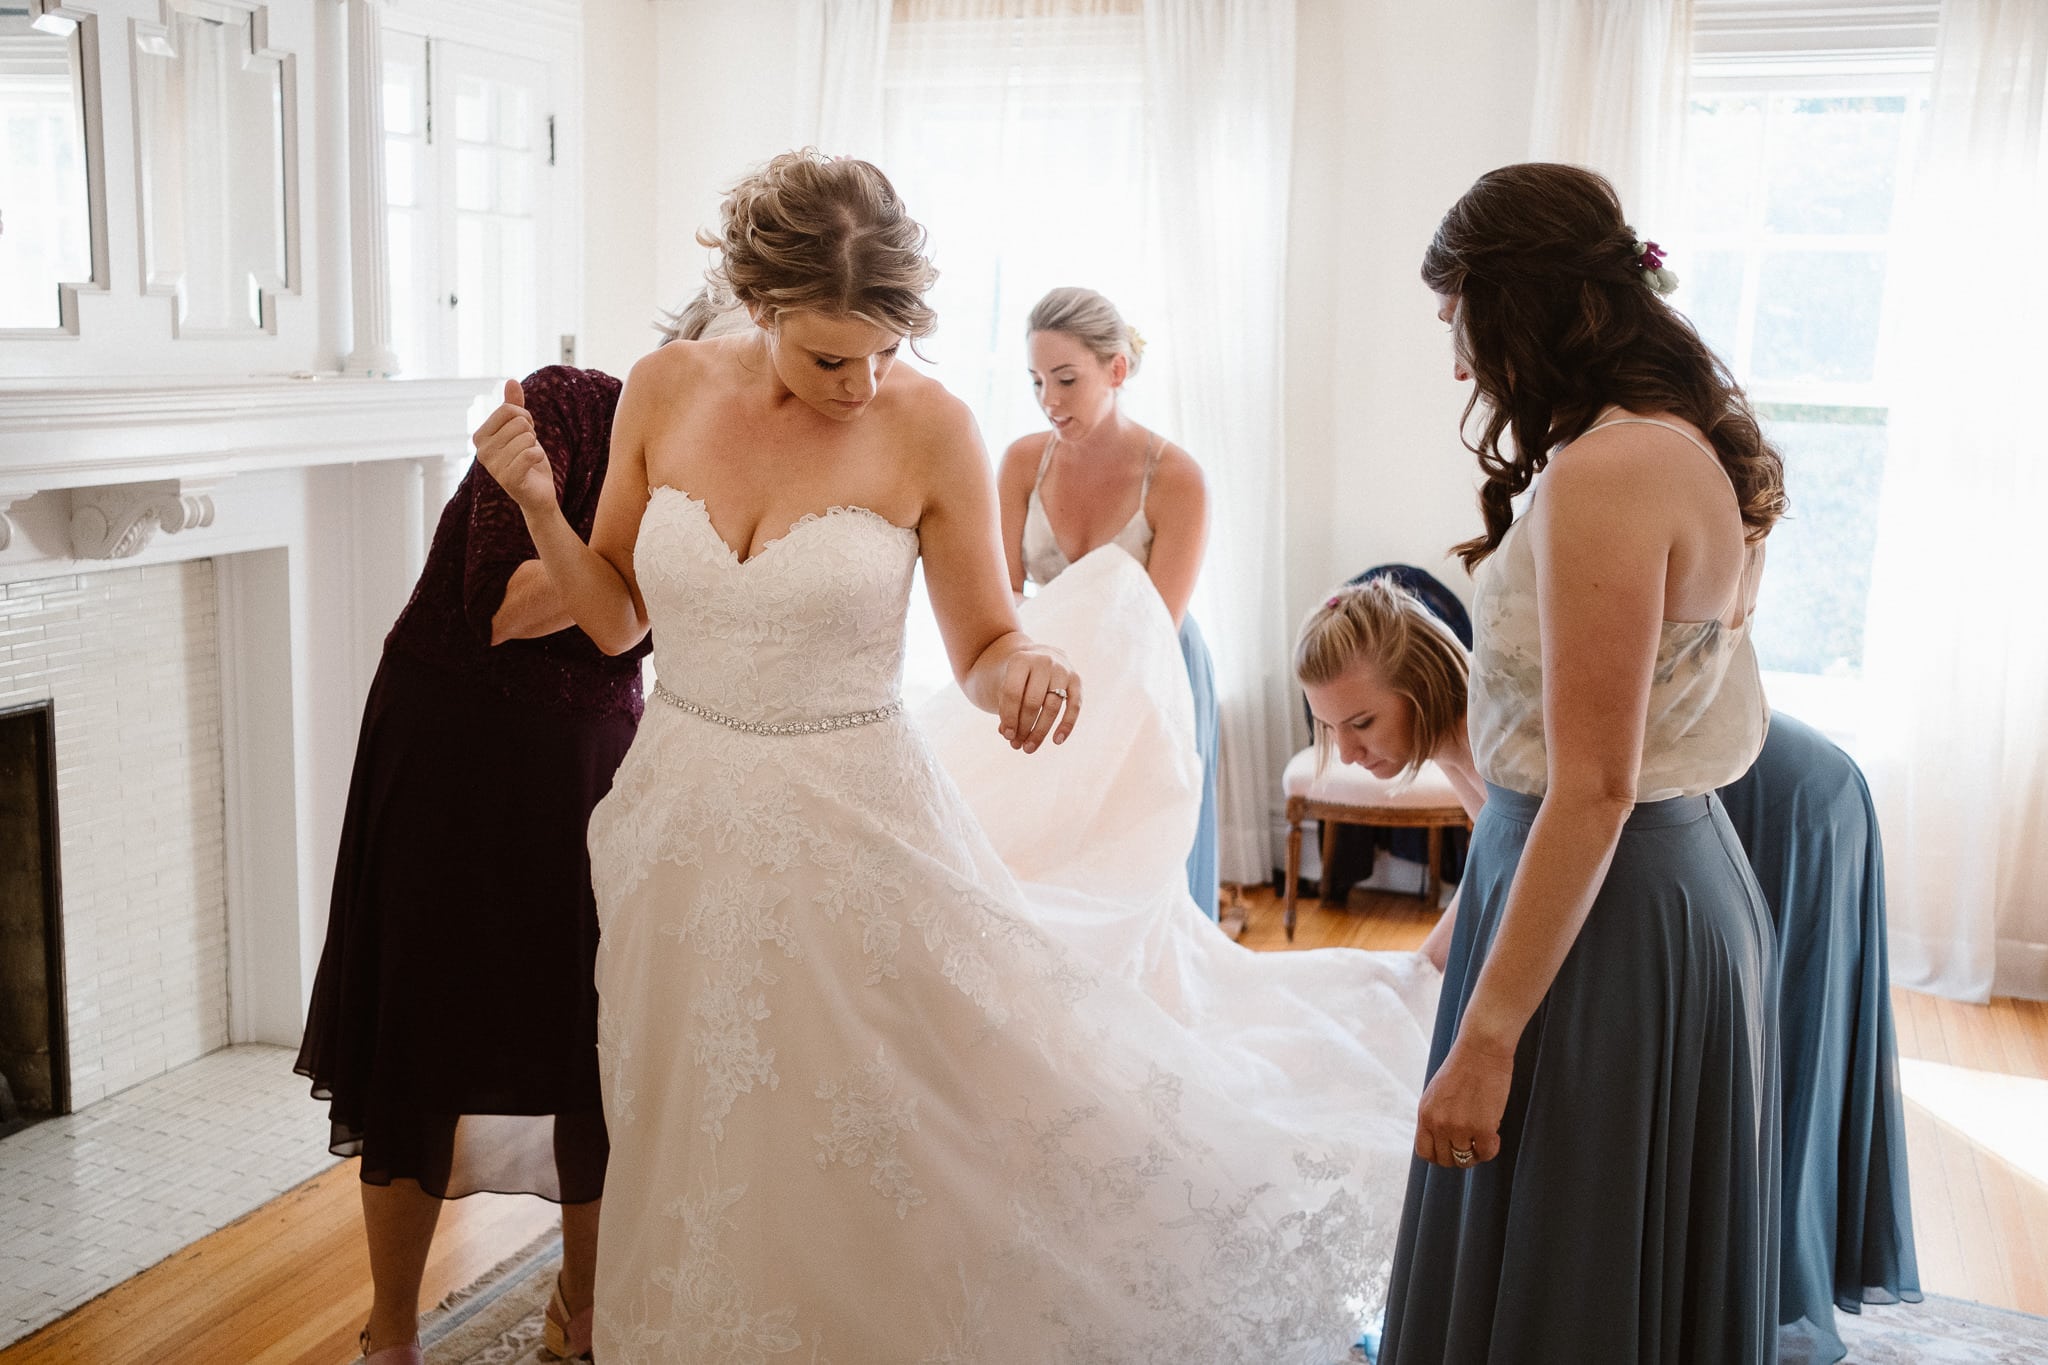 Grant Humphreys Mansion Wedding Photographer, Denver wedding photographer, Colorado wedding photographer, bride getting ready